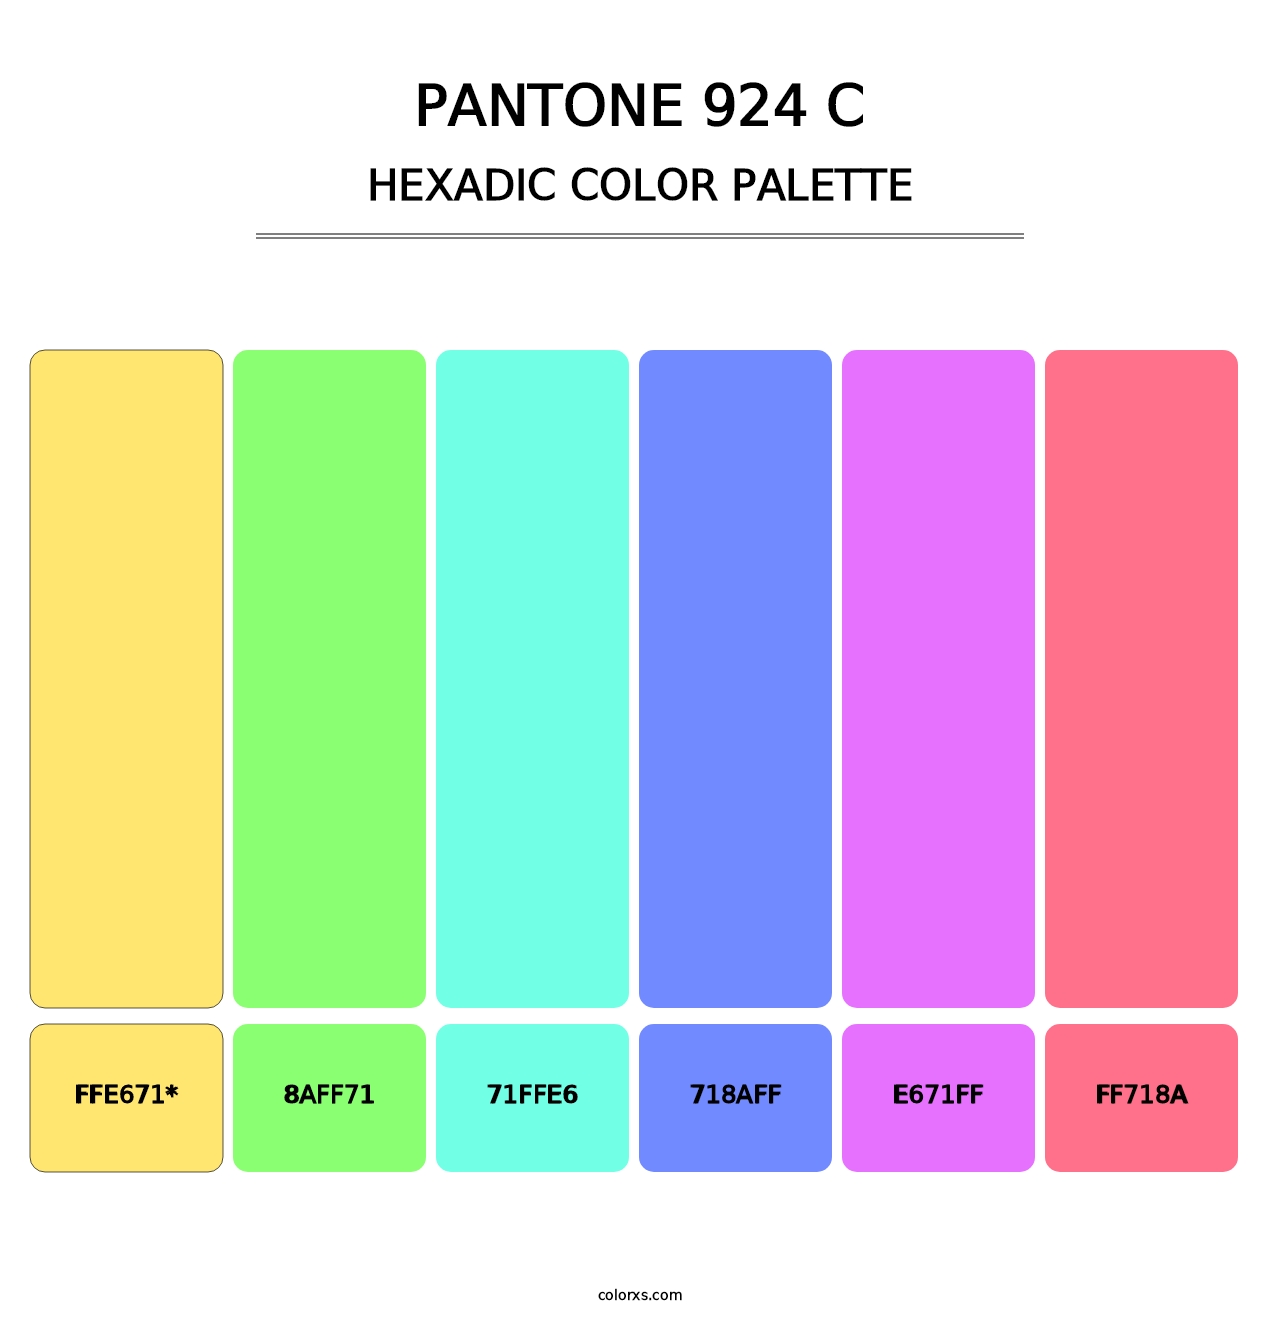 PANTONE 924 C - Hexadic Color Palette